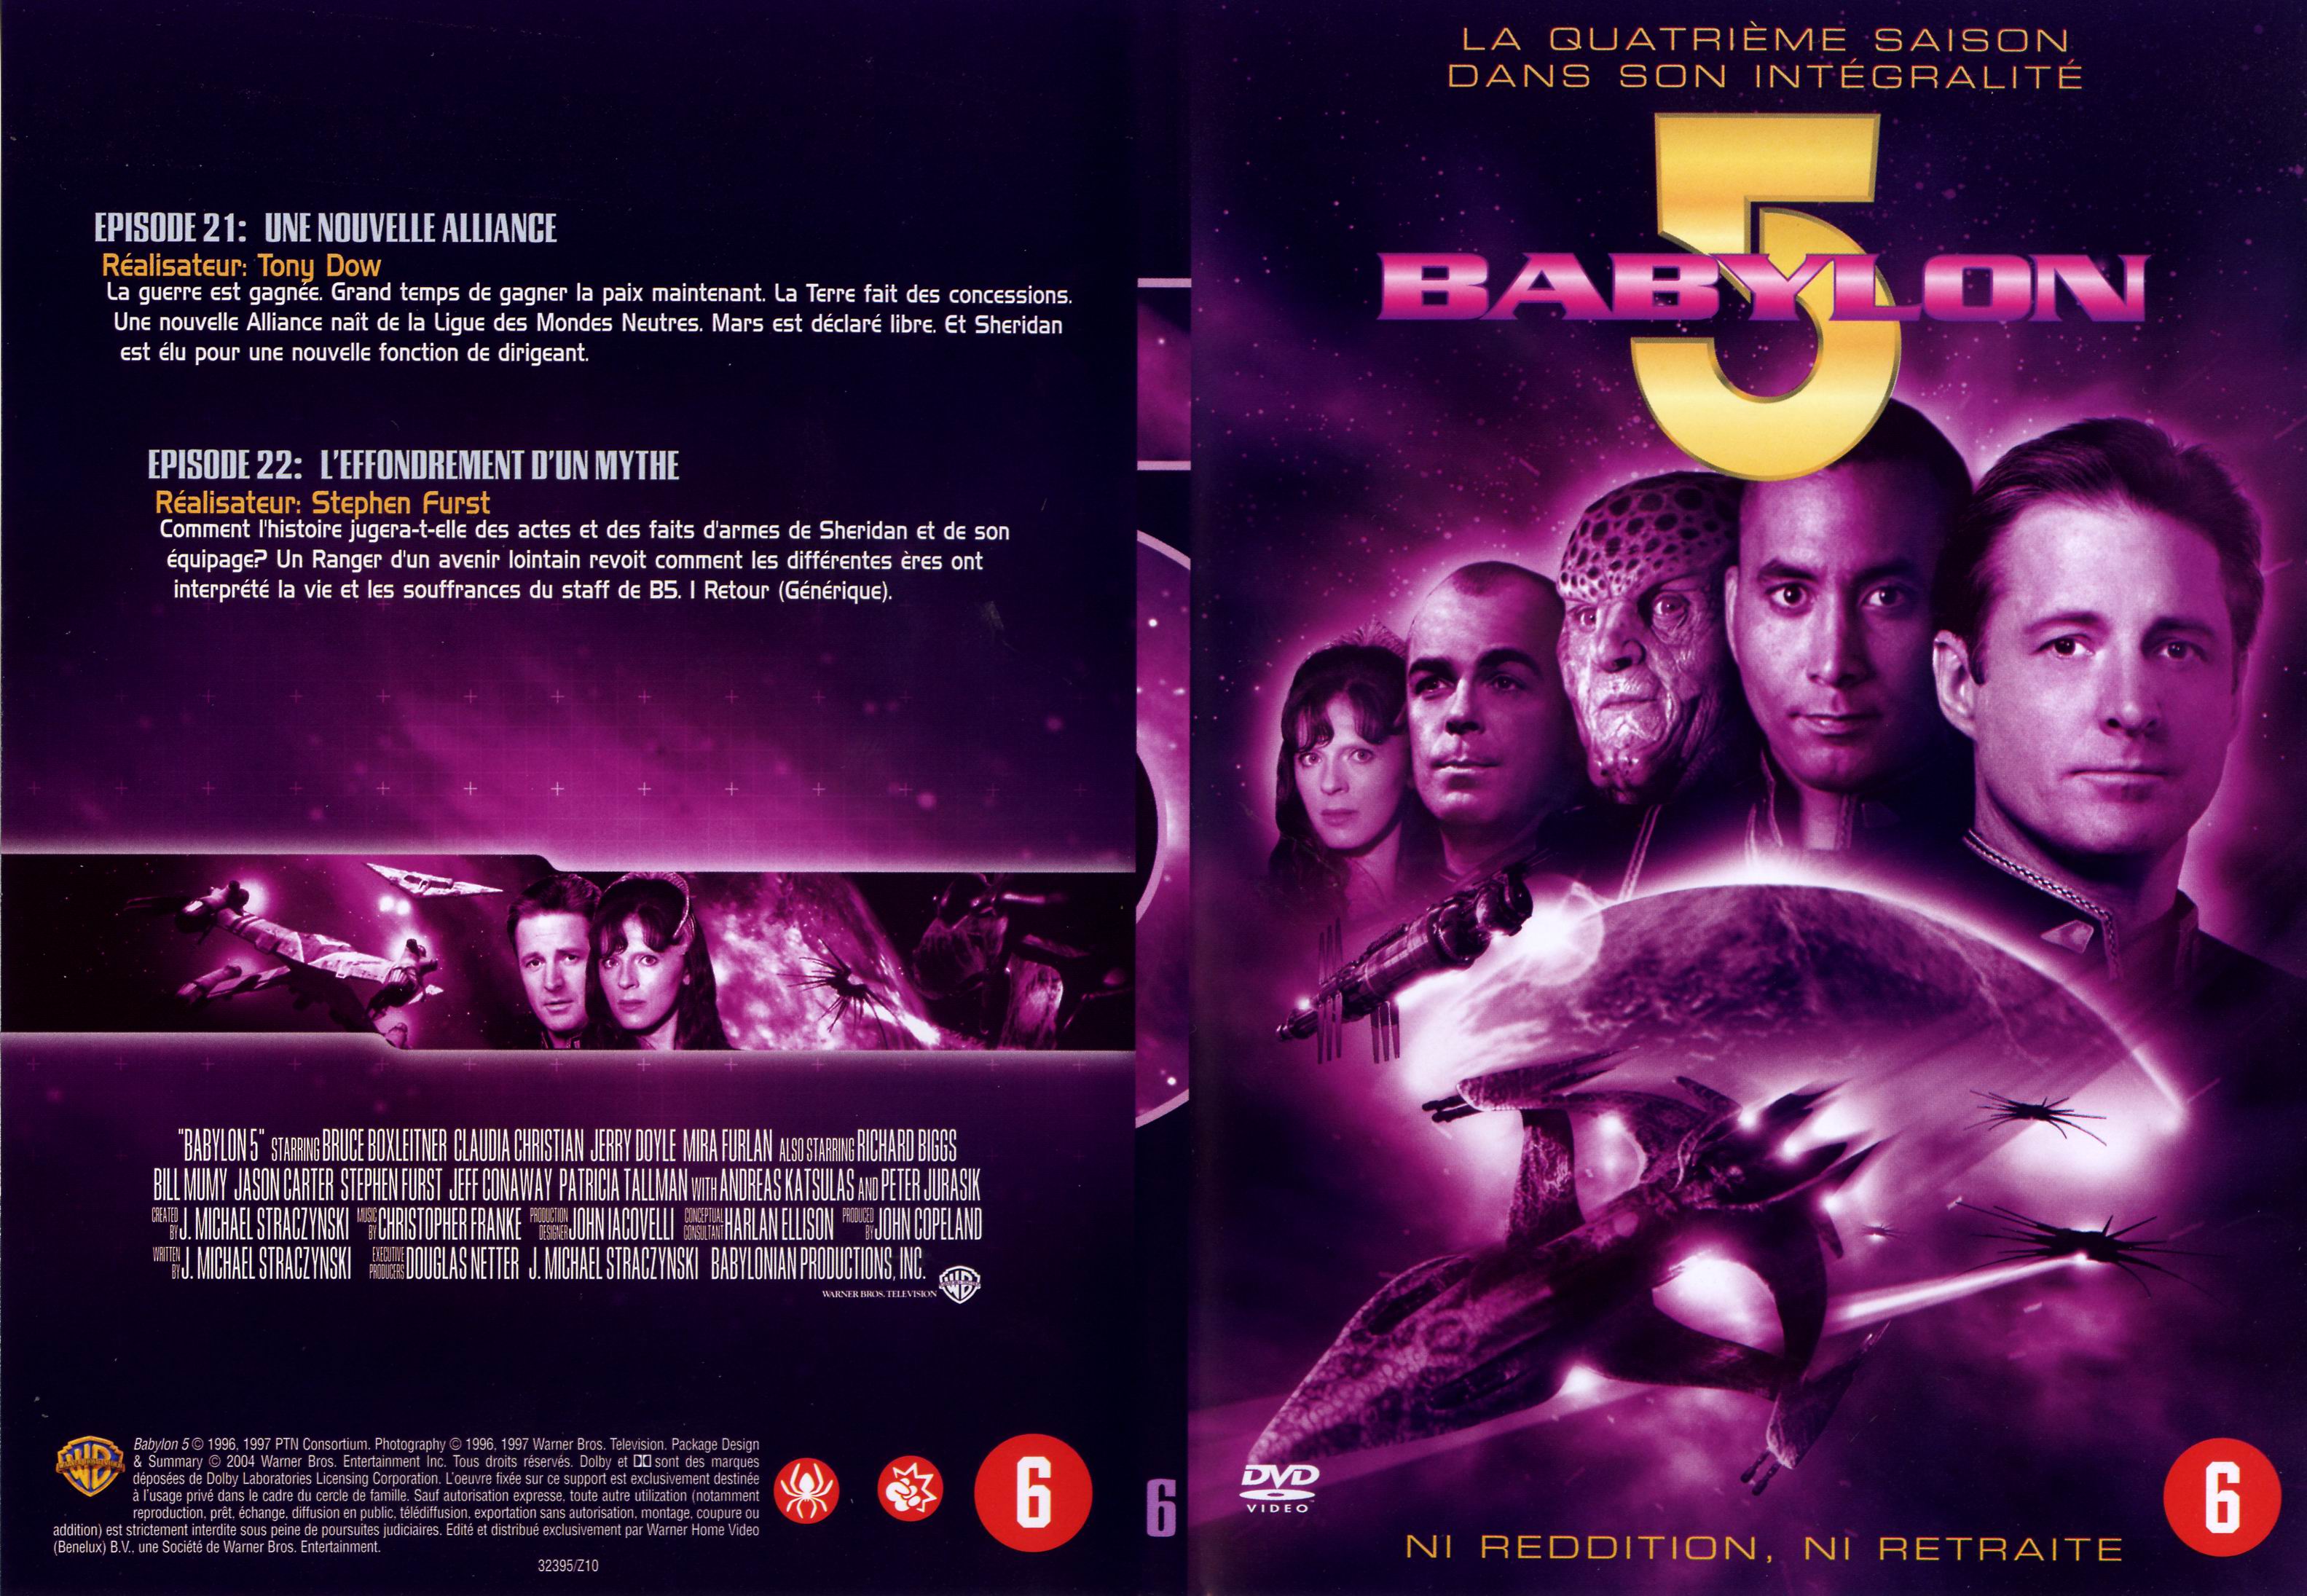 Jaquette DVD Babylon 5 saison 4 dvd 6